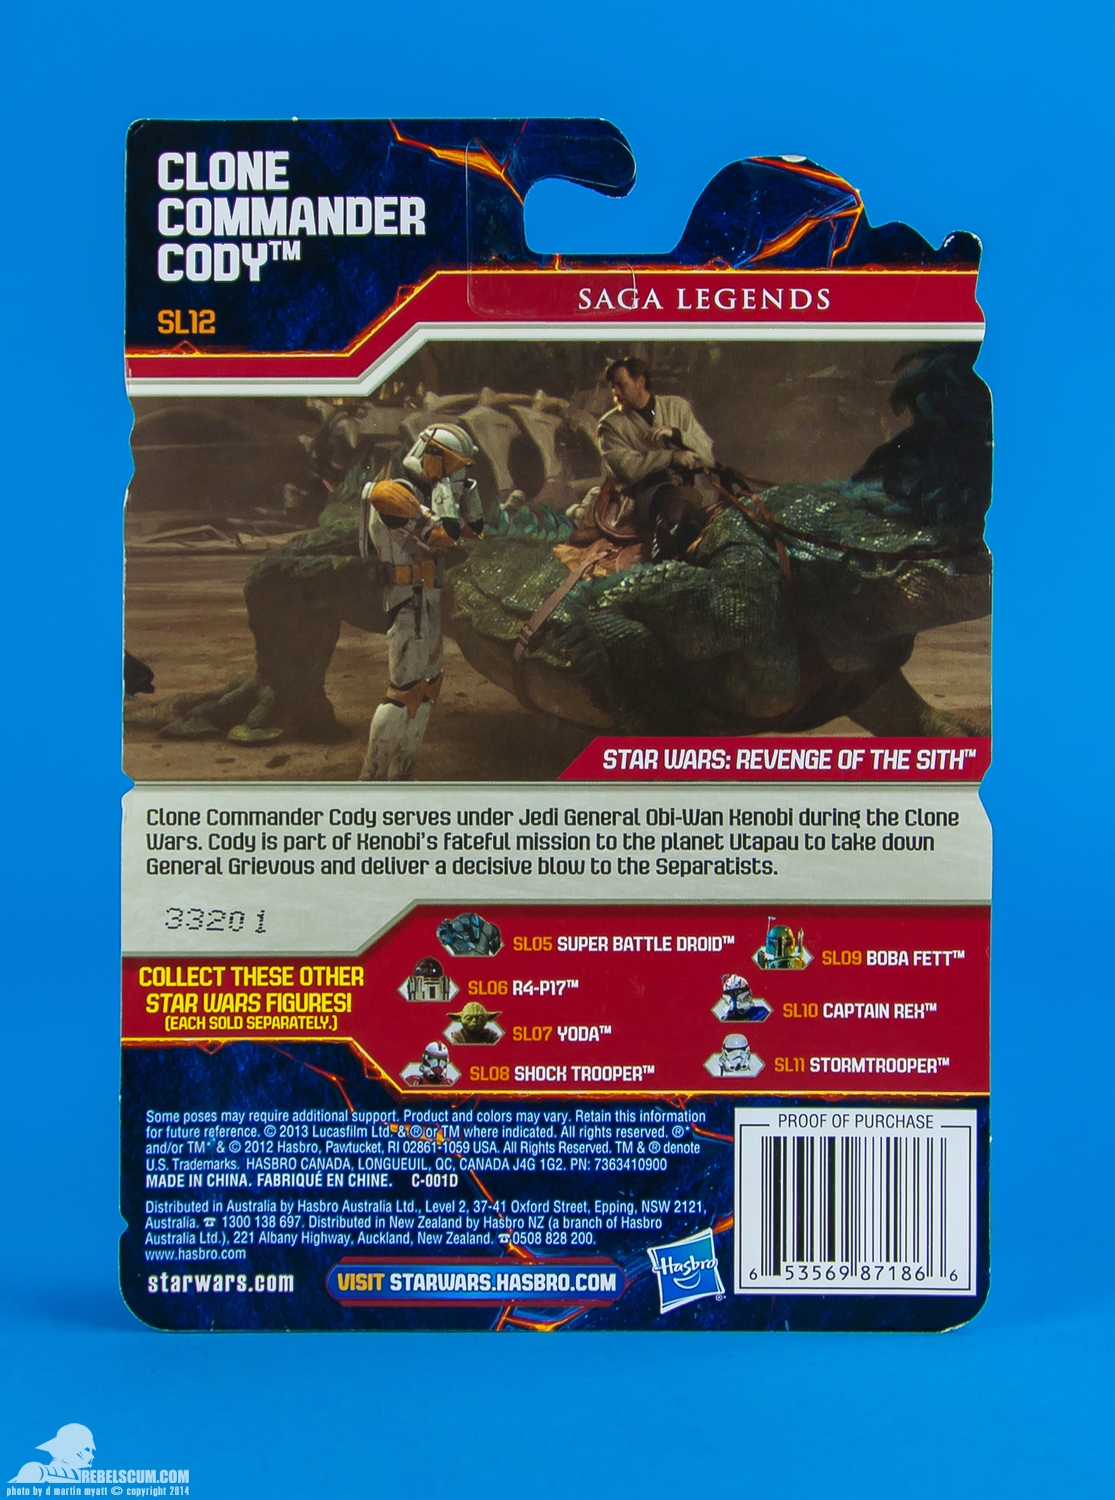 SL12-Clone-Commander-Cody-Saga-Legends-Star-Wars-Hasbro-017.jpg